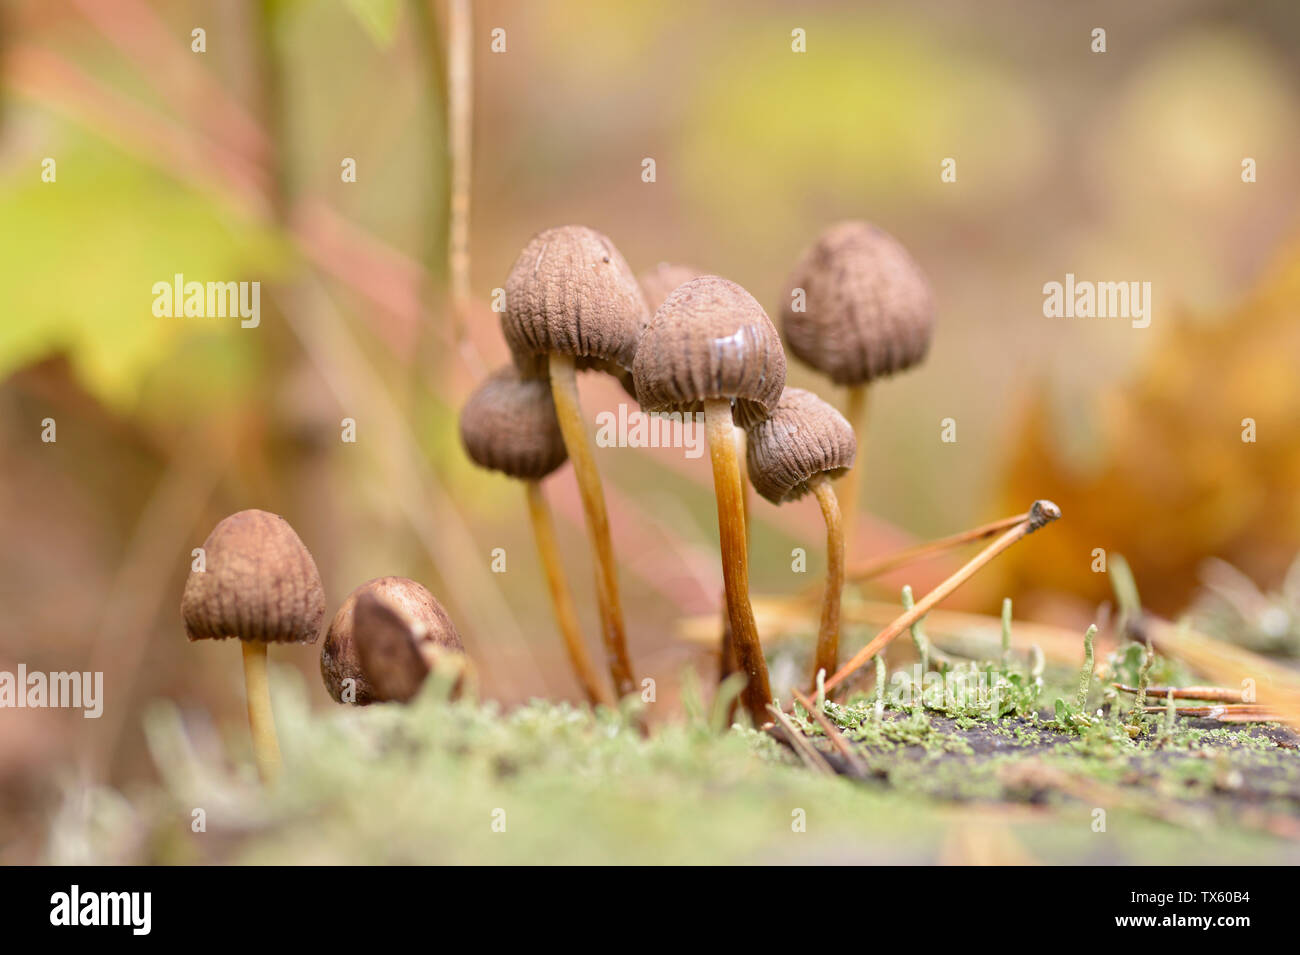 Mushrooms Psilocybe semilanceata growing on the ground Stock Photo